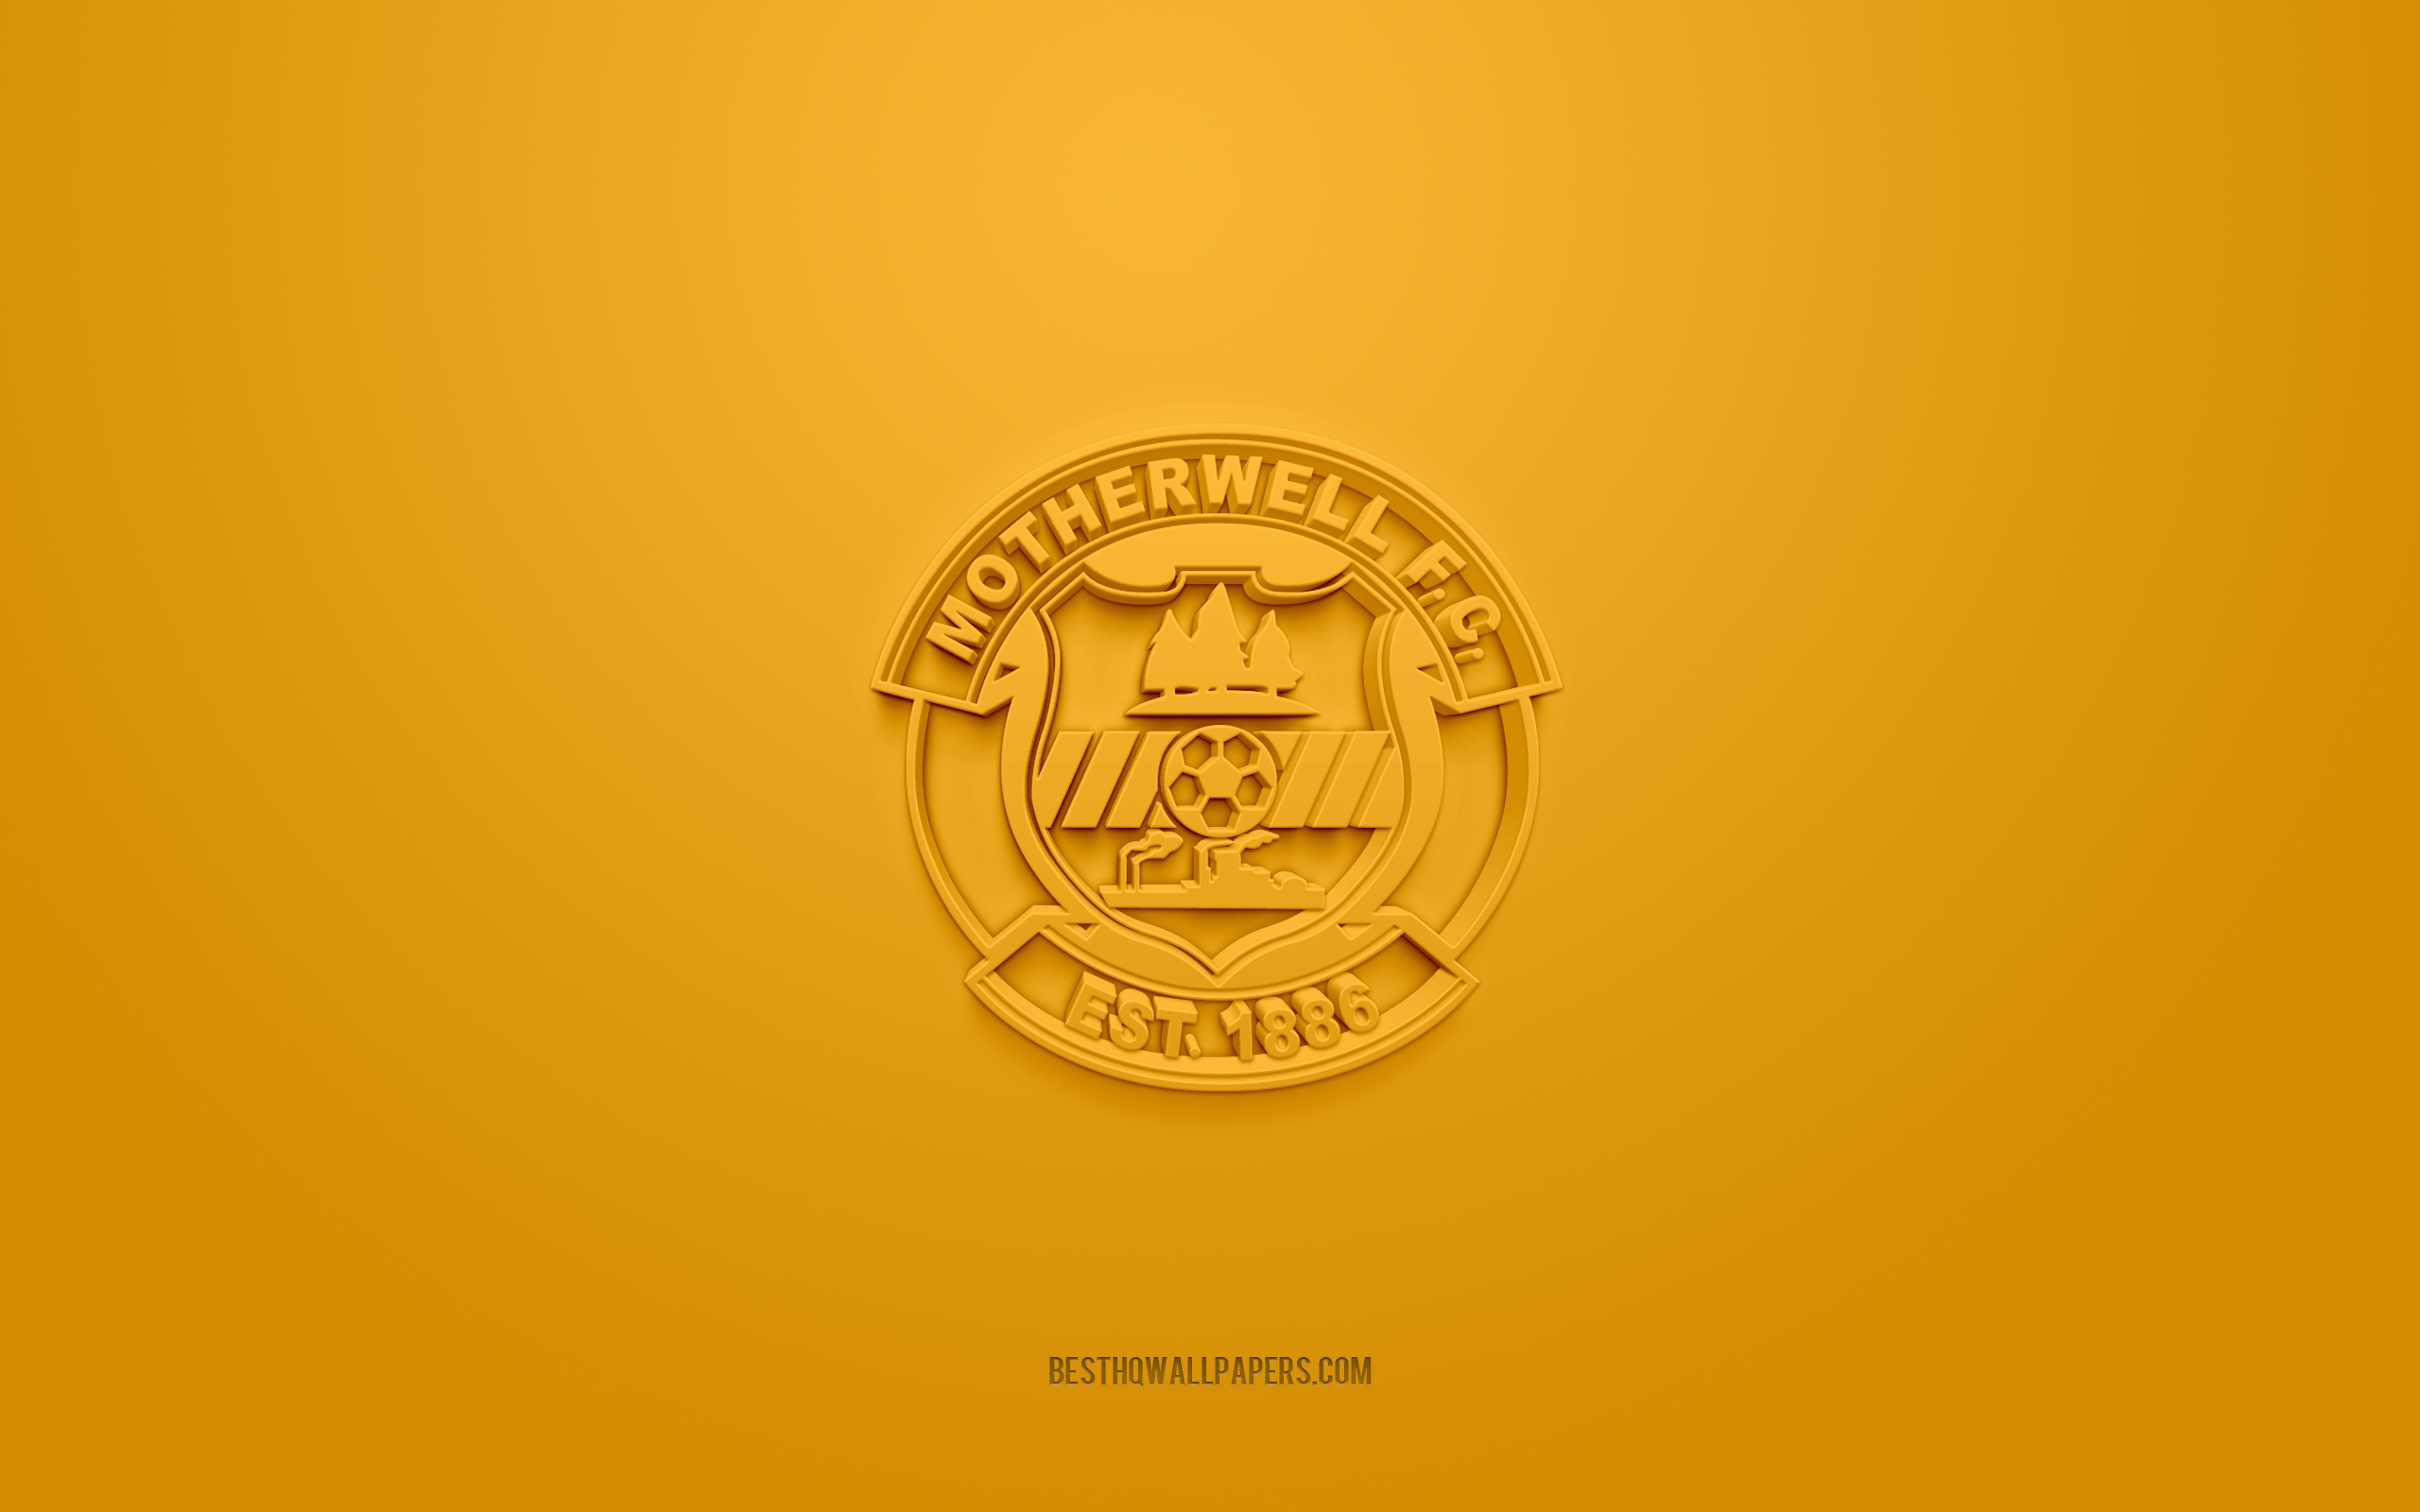 Download wallpaper Motherwell FC, creative 3D logo, yellow background, 3D emblem, Scottish football club, Scottish Premiership, Motherwell, Scotland, 3D art, football, Motherwell FC 3D logo for desktop with resolution 2560x1600. High Quality